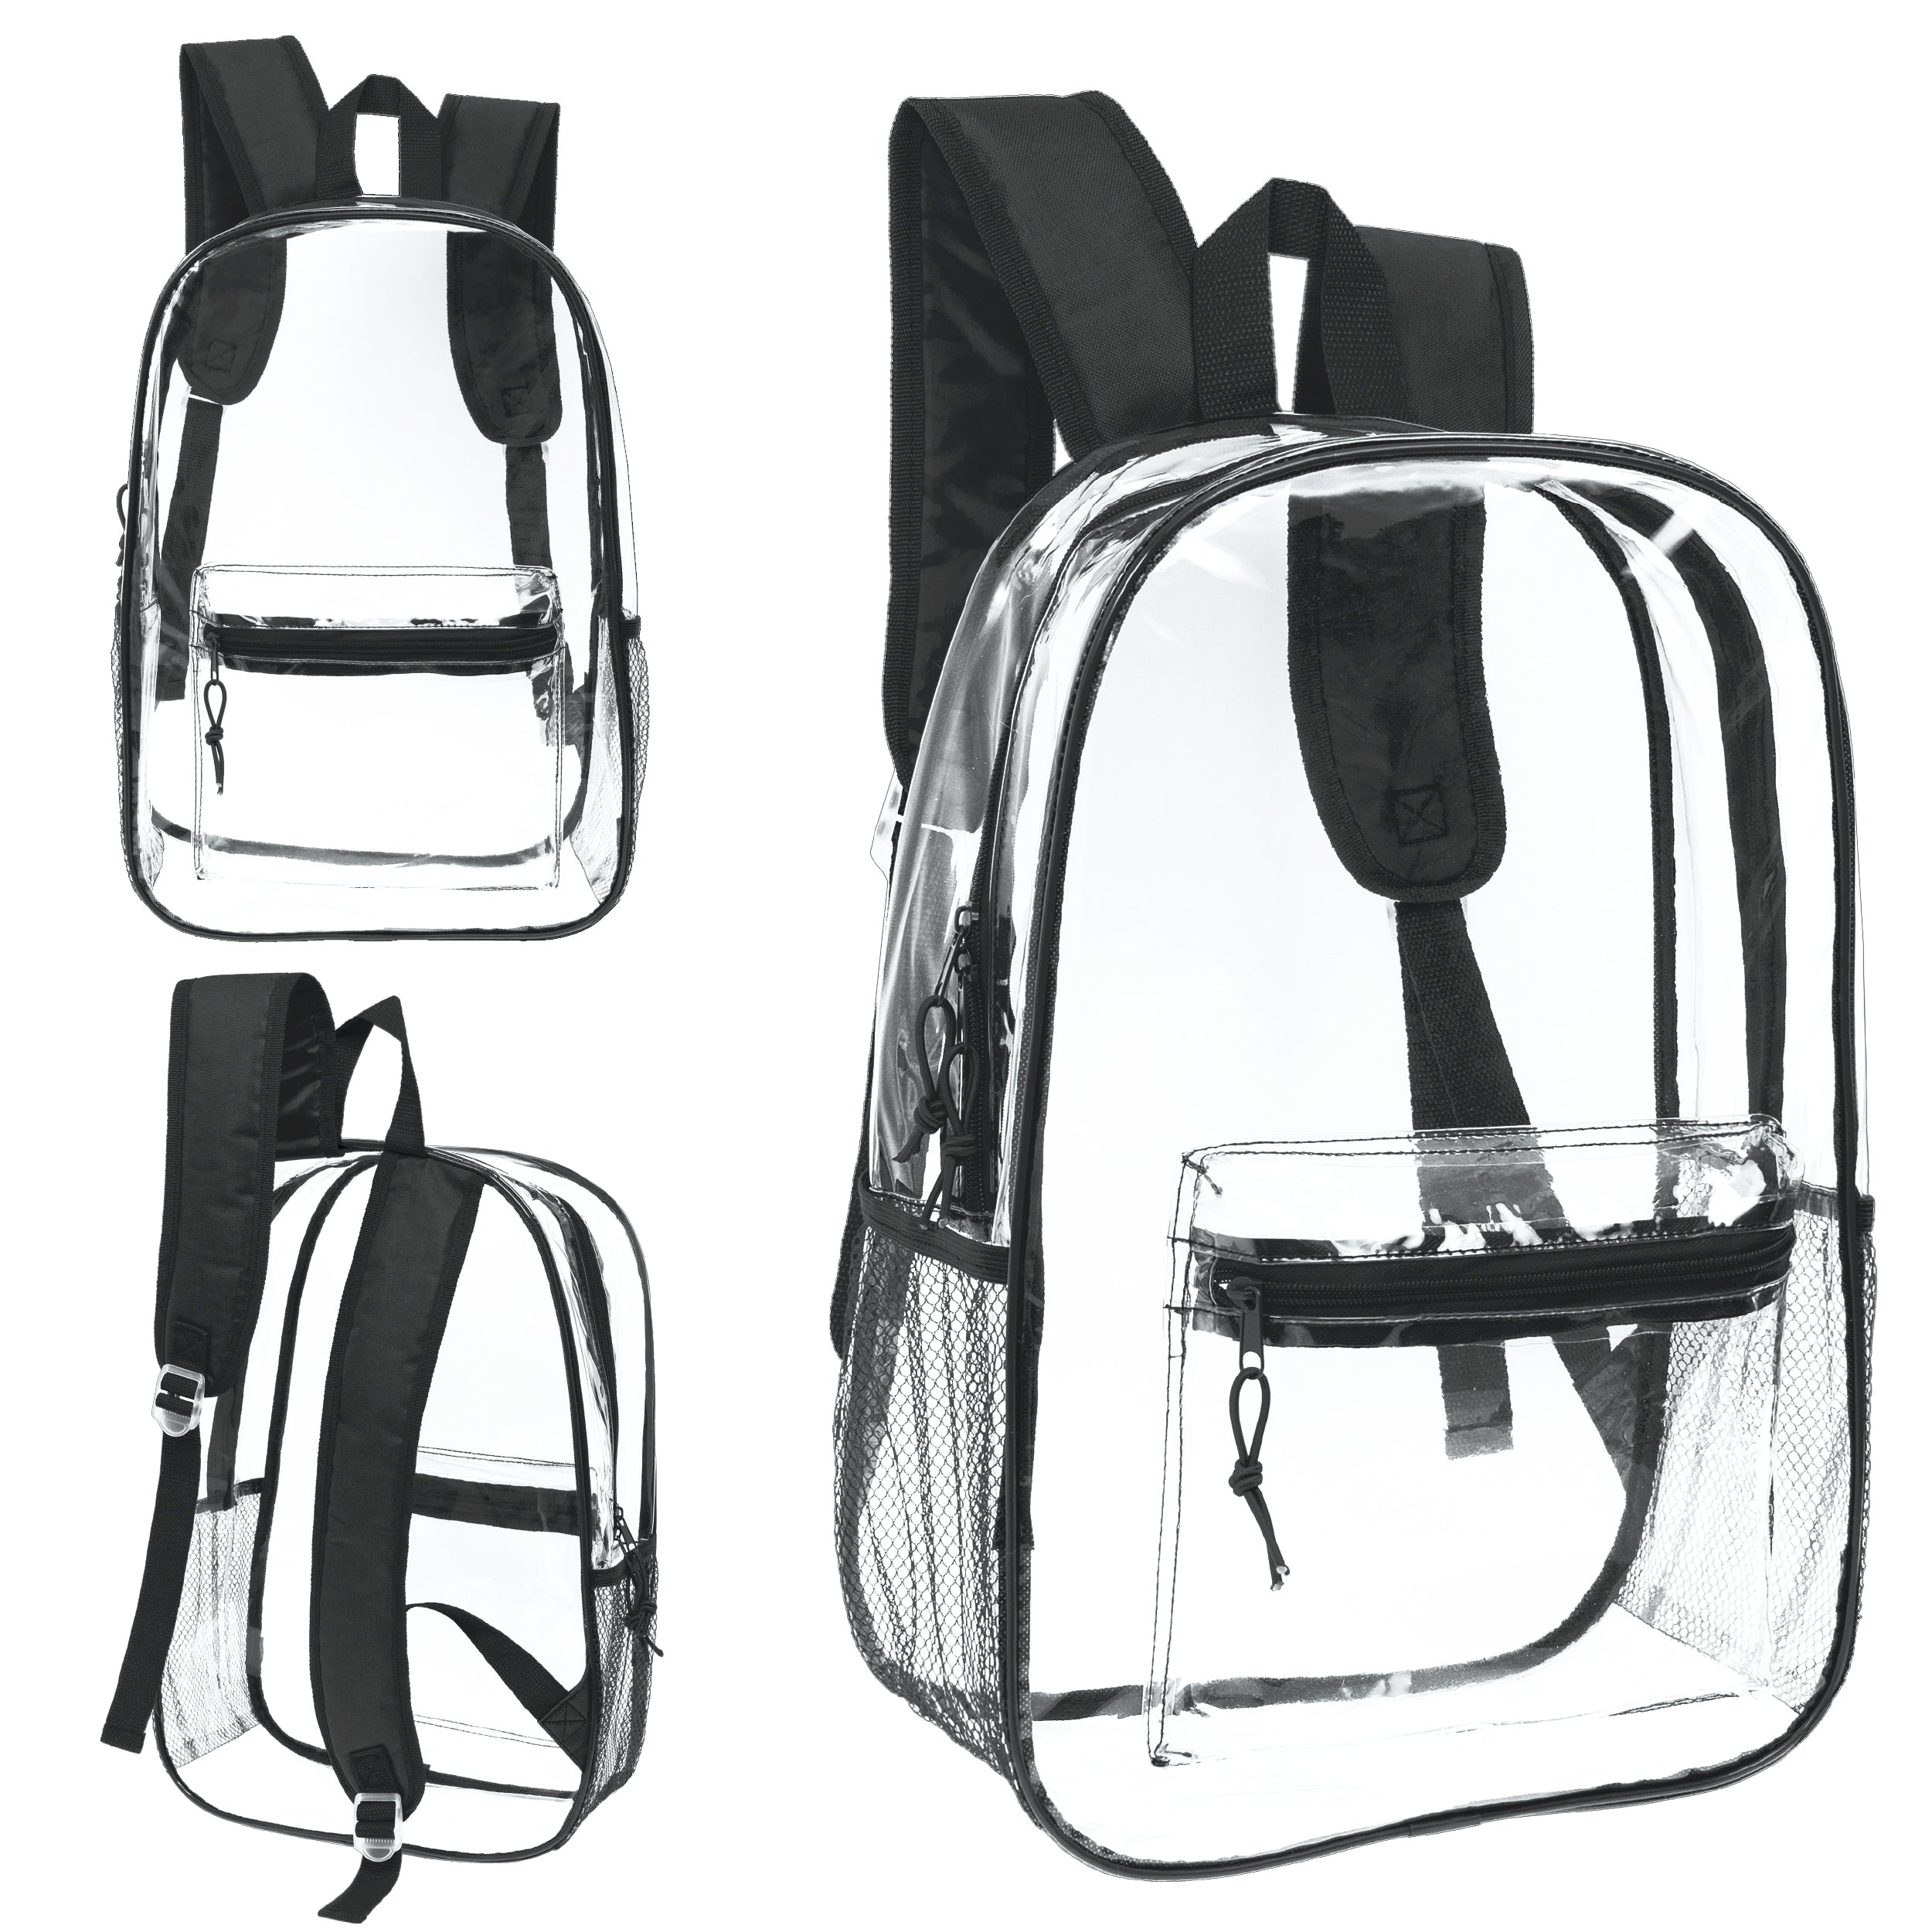 17" Clear Transparent Wholesale Backpack in Black With Side Pocket - Bulk Case of 24